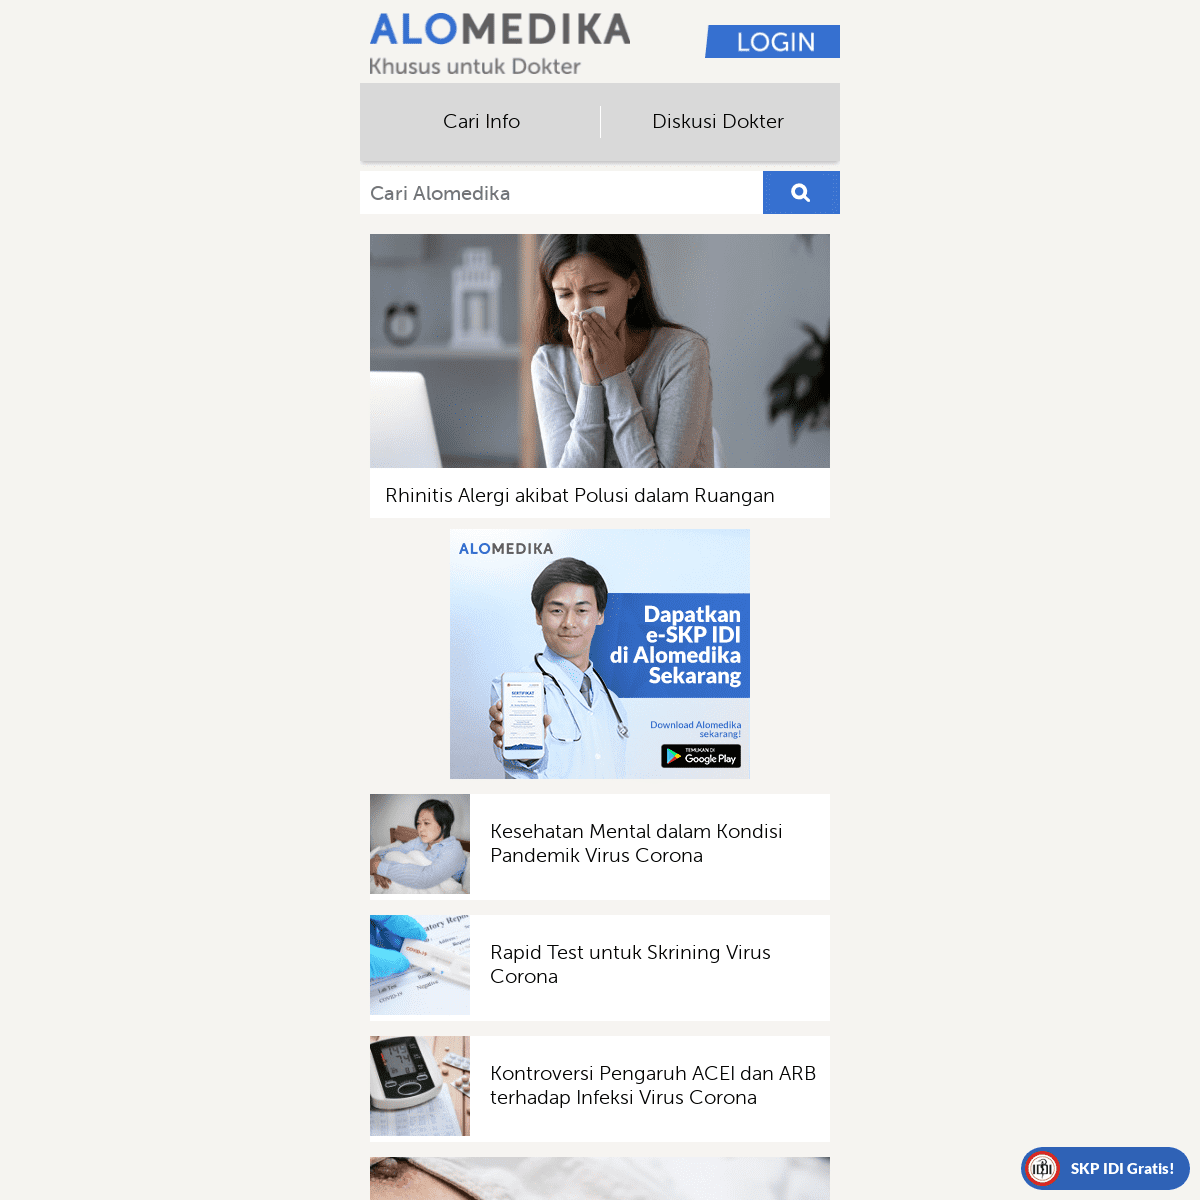 A complete backup of alomedika.com